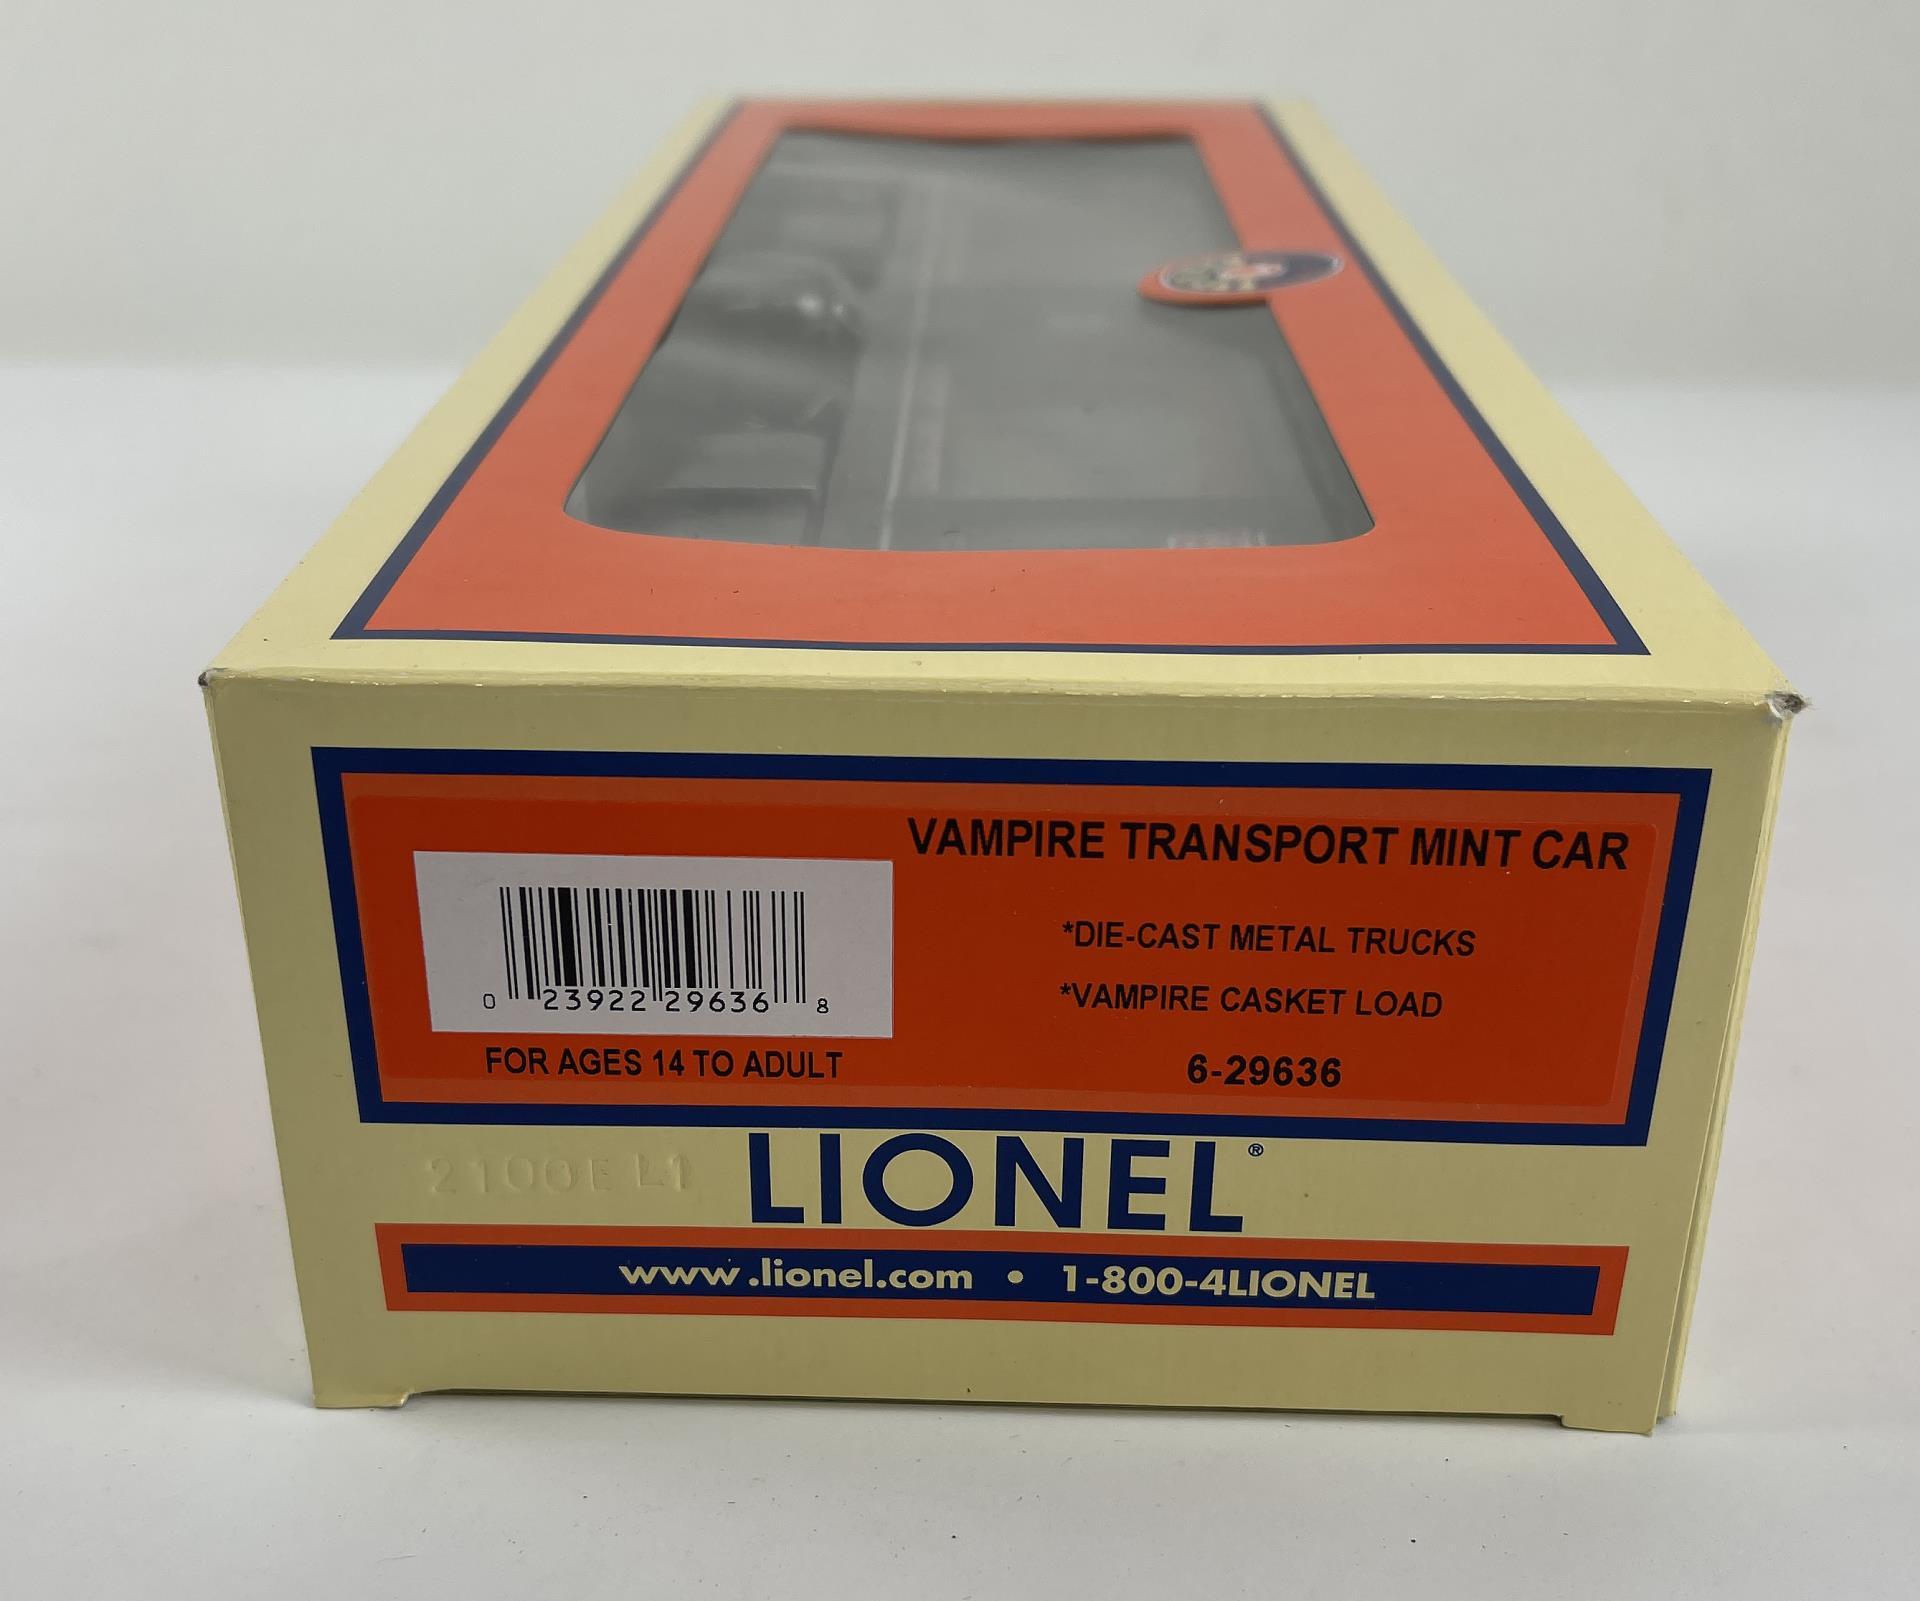 Lionel Vampire Transport Mint Car 6-29636